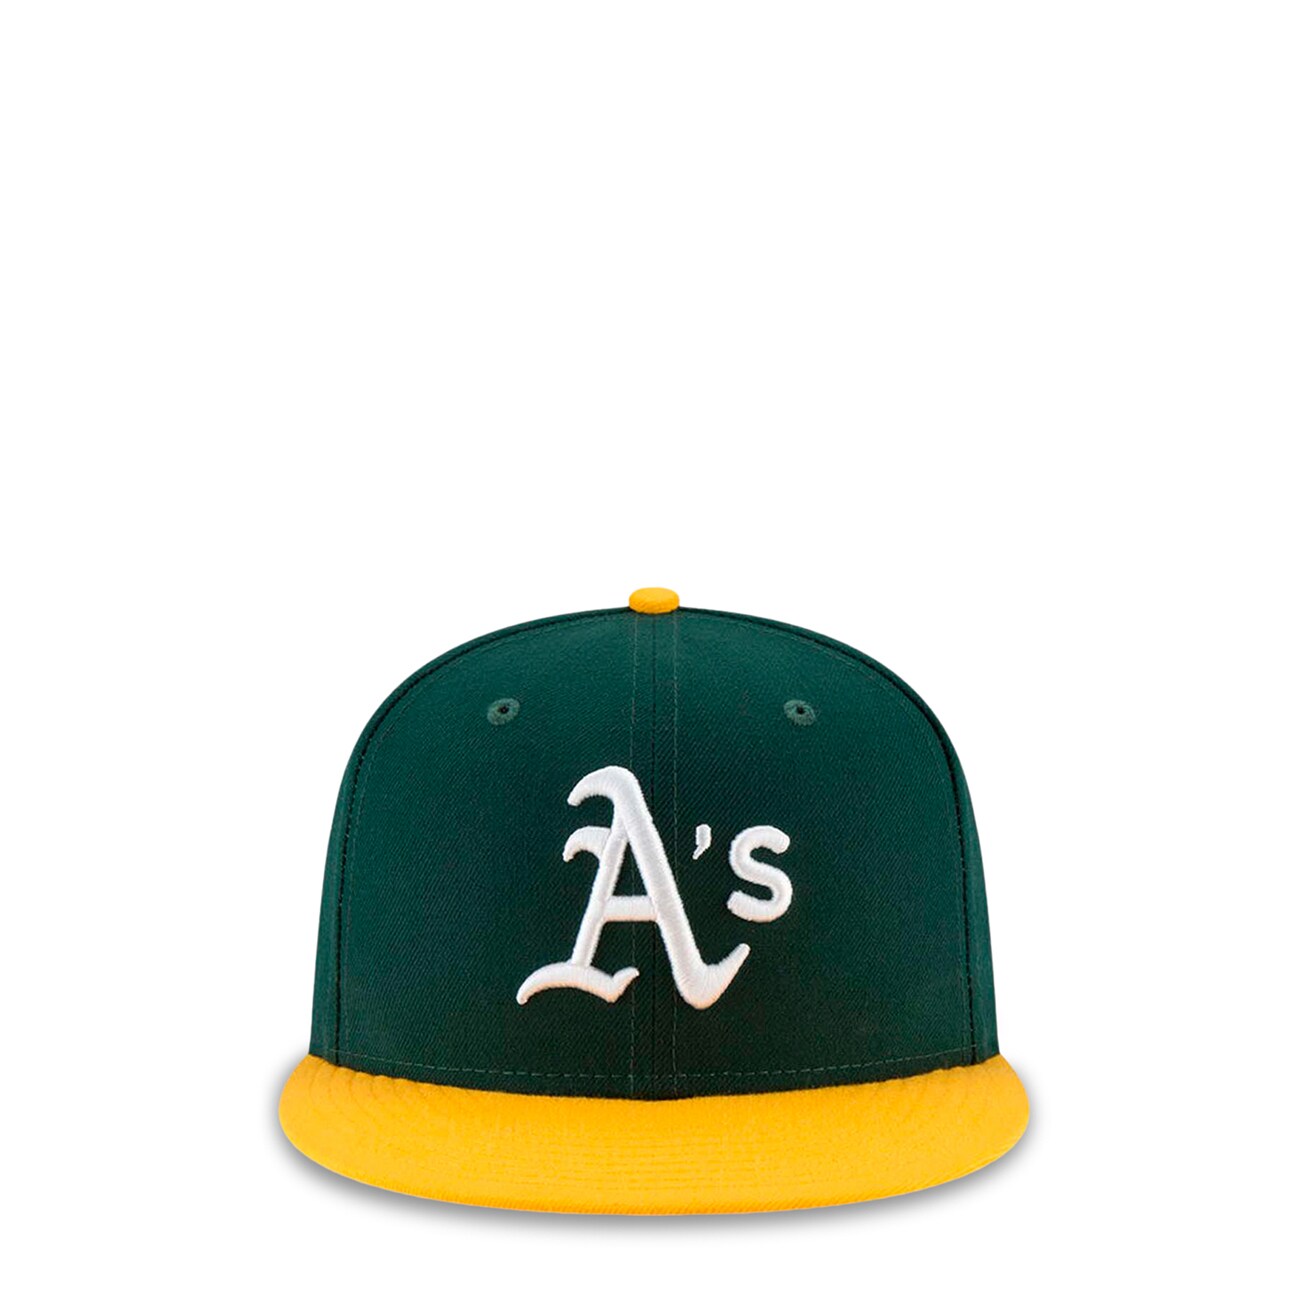 Oakland Athletics A's New Era MLB Baseball On-Field Fitted Hat Cap 7 1/8